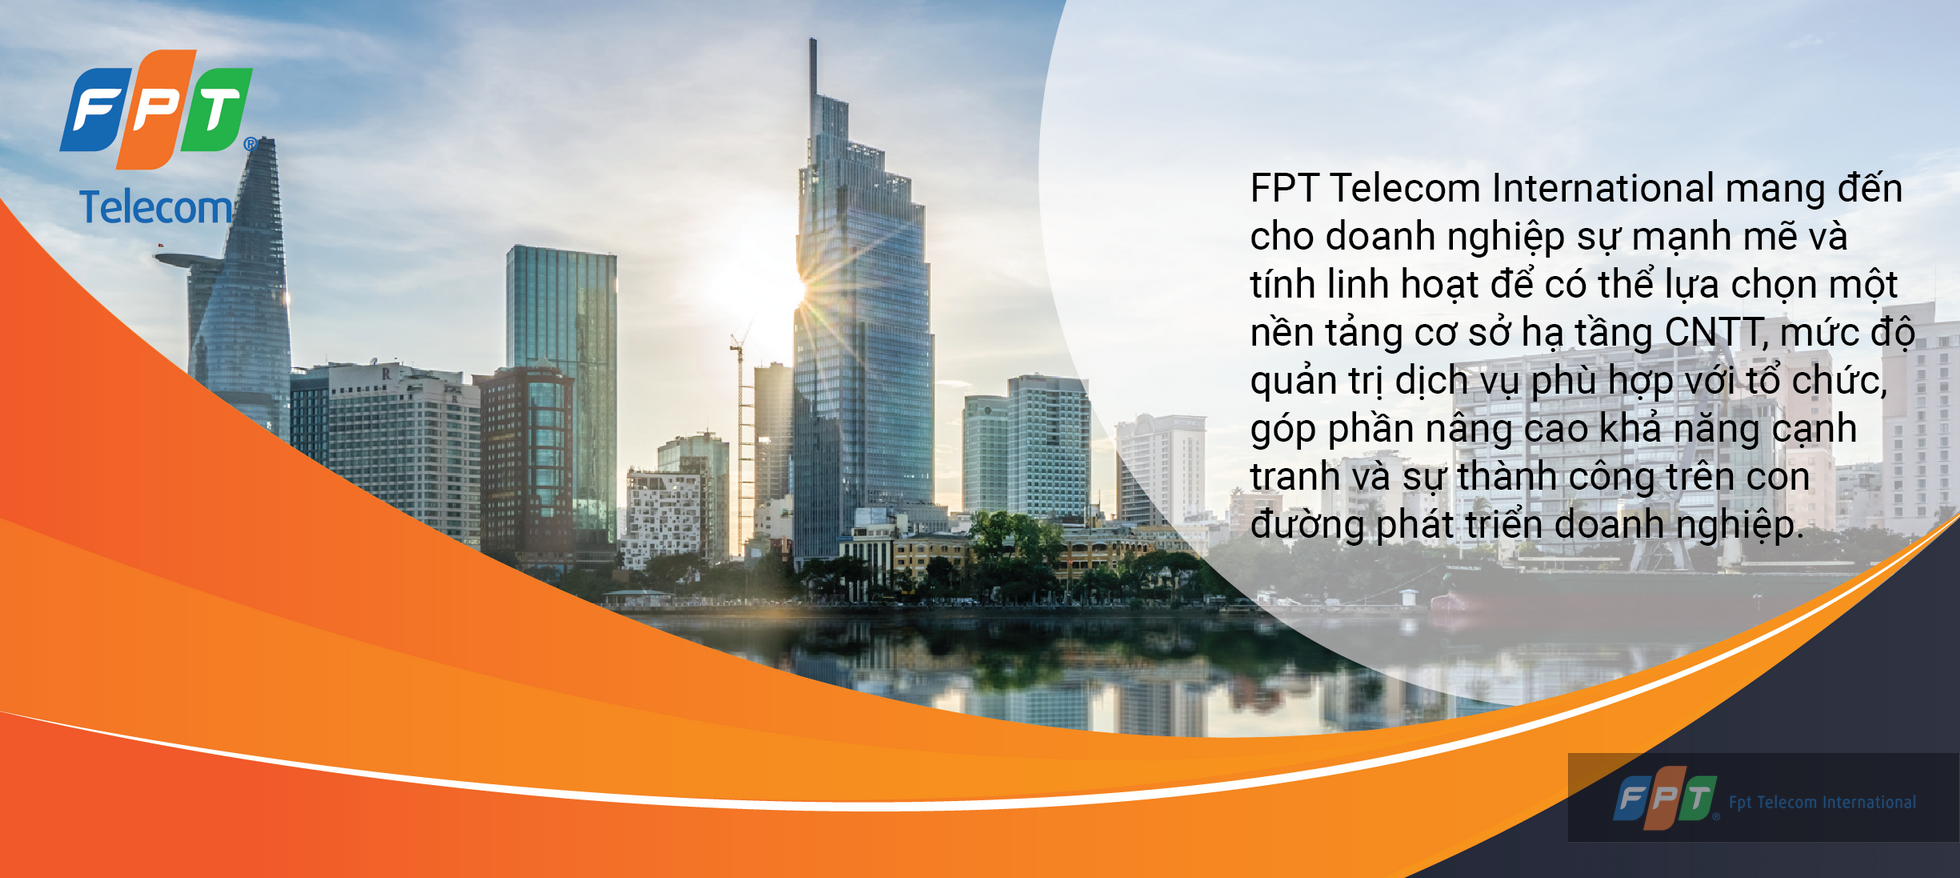 Giới thiệu về FPT Telecom International